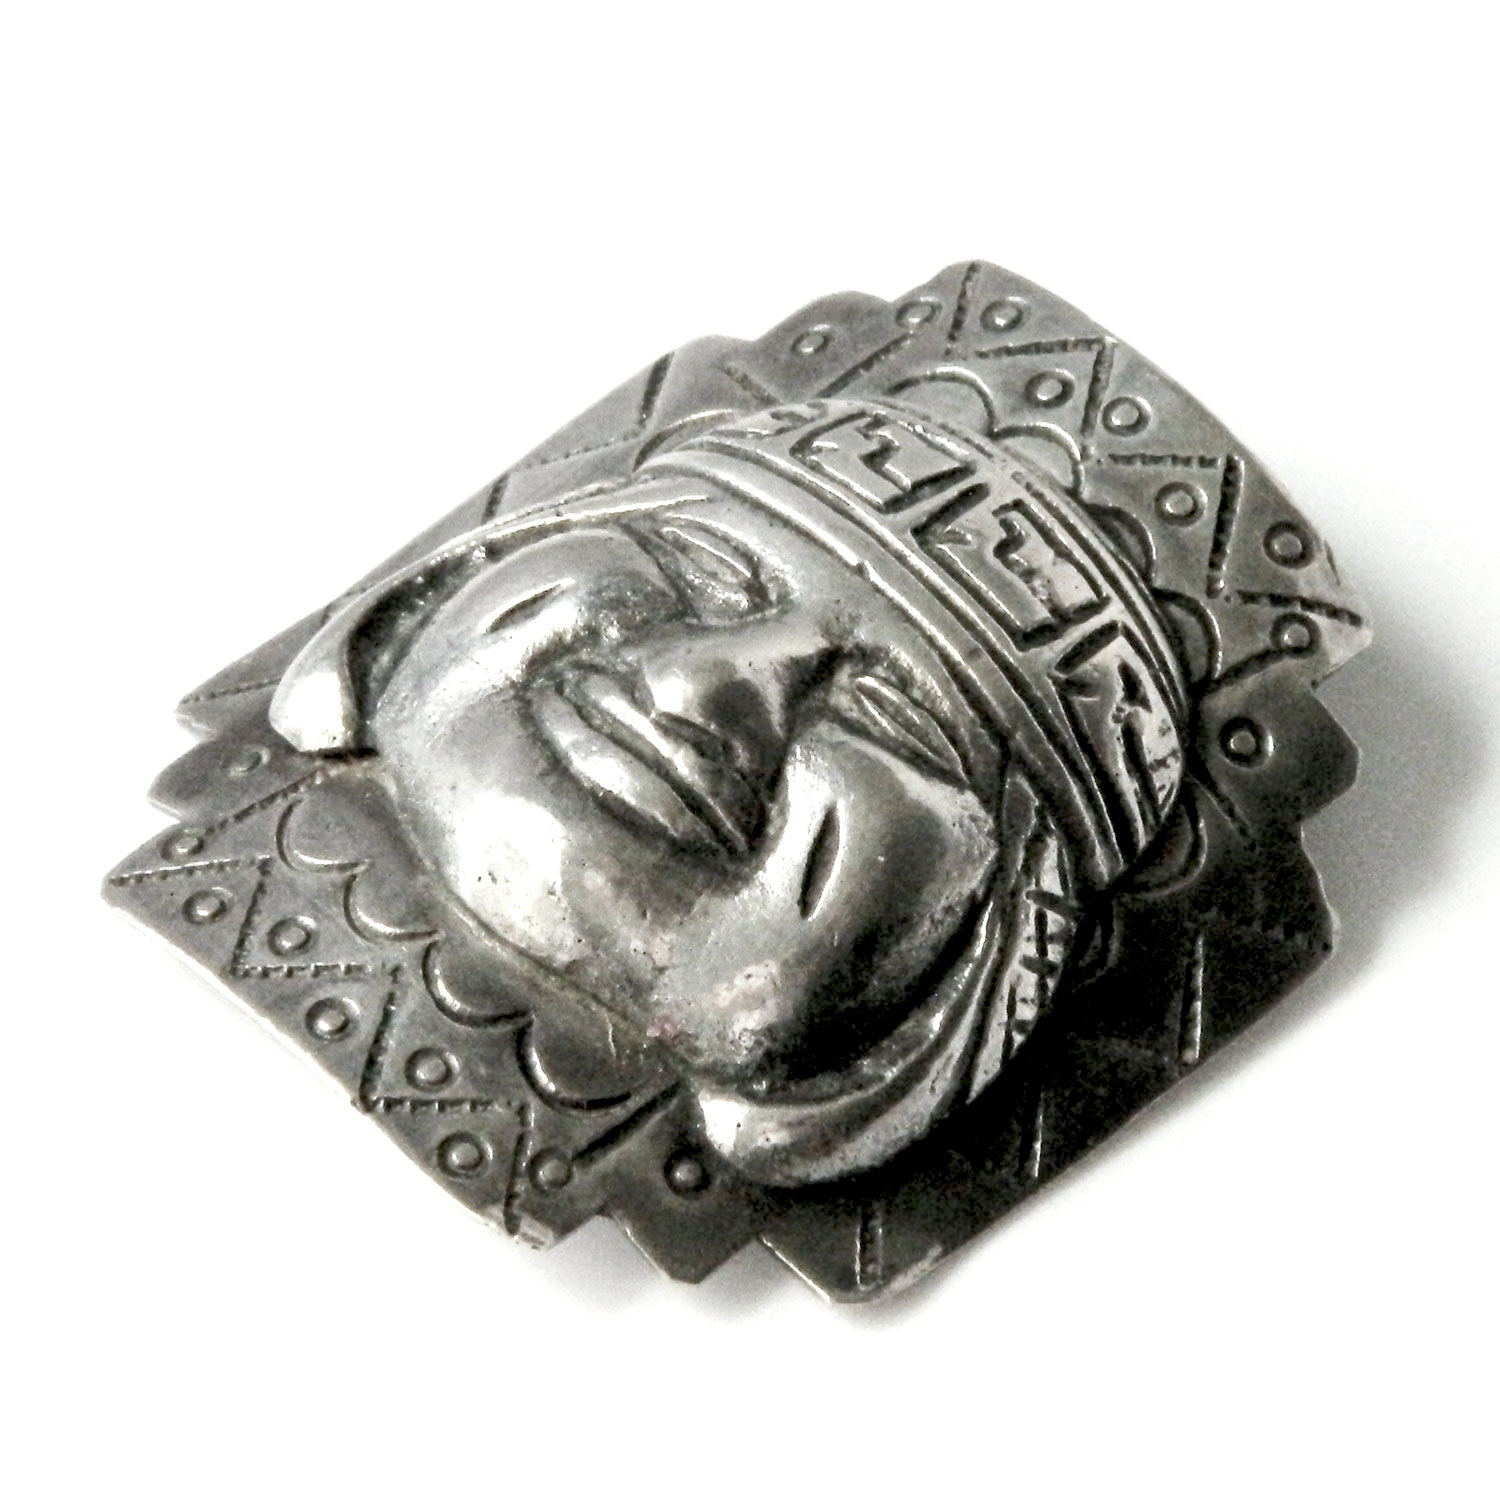 Peru silver brooch